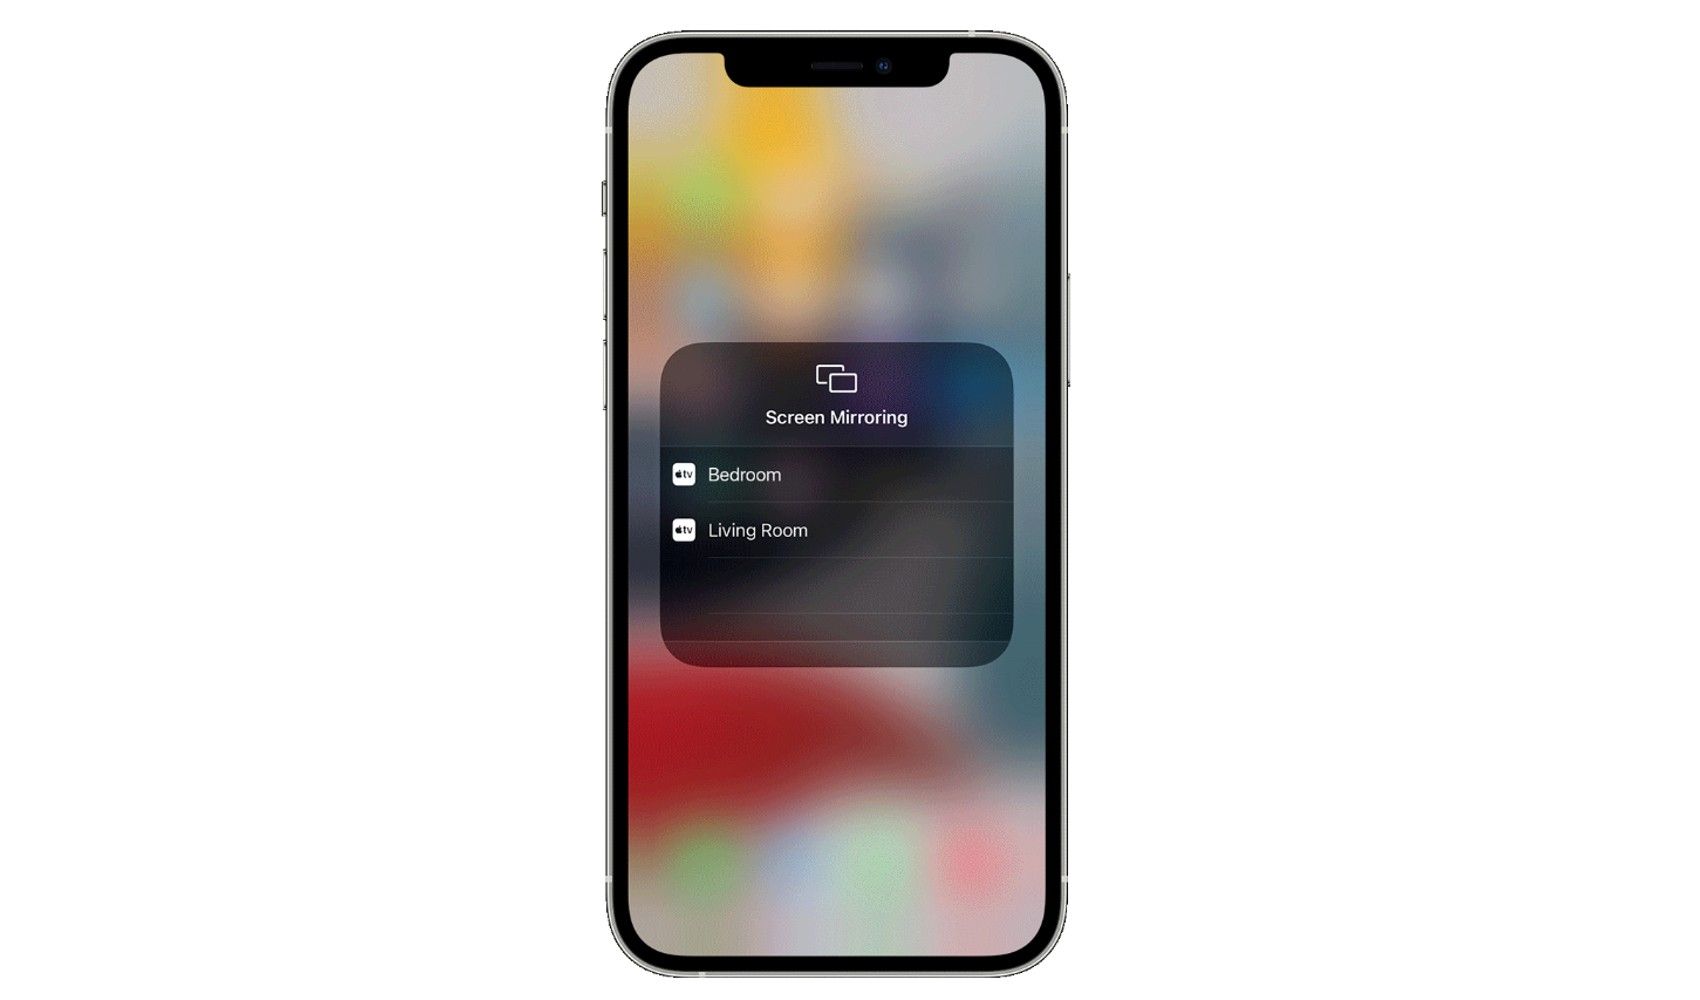 Screen mirroring on an iPhone